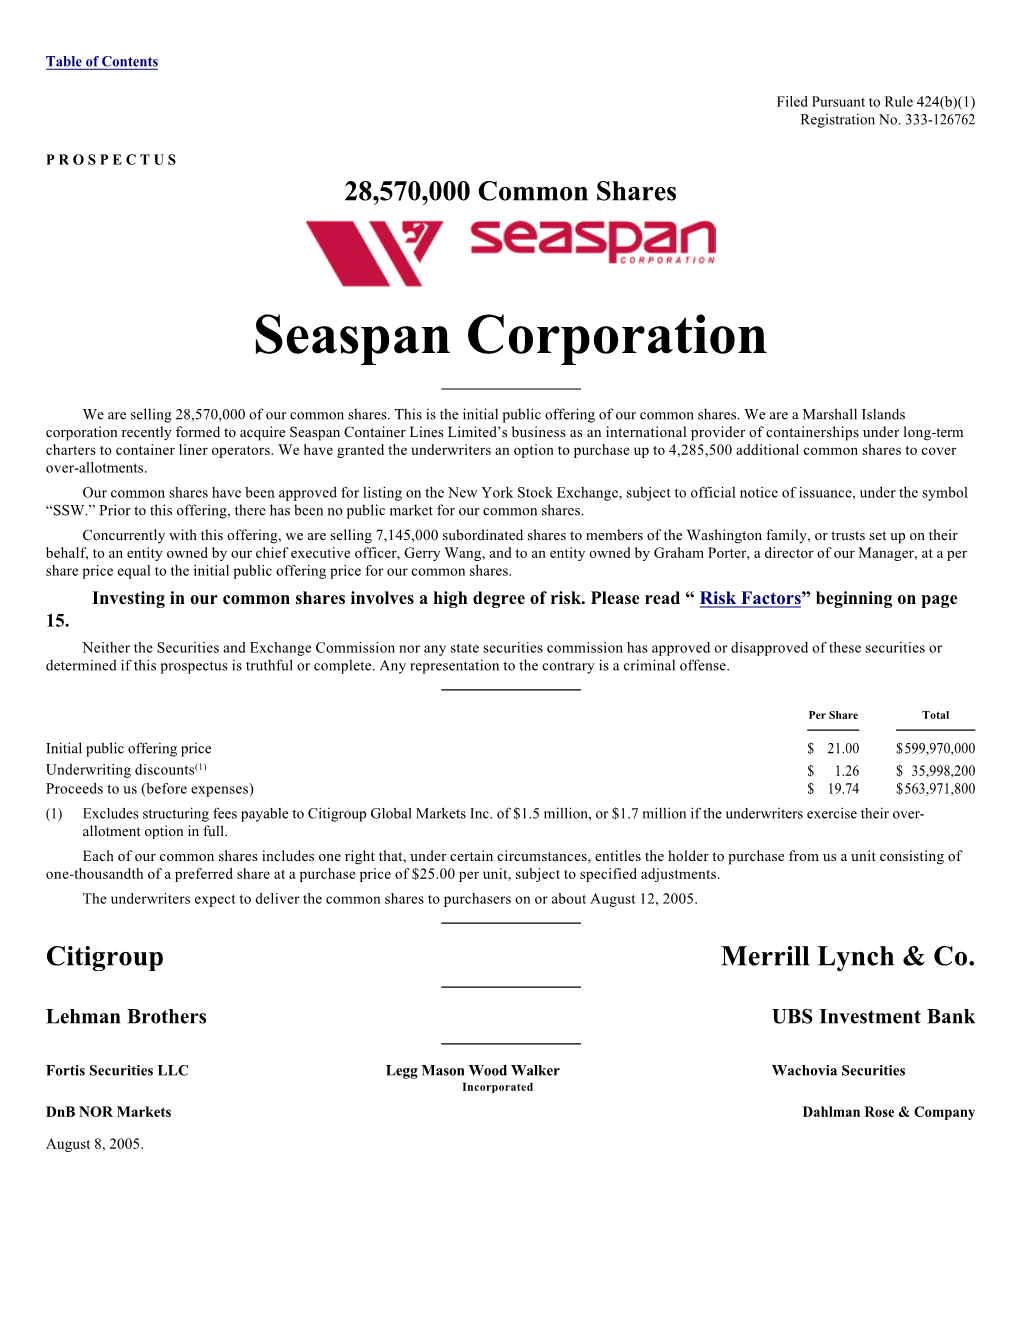 Seaspan Corporation